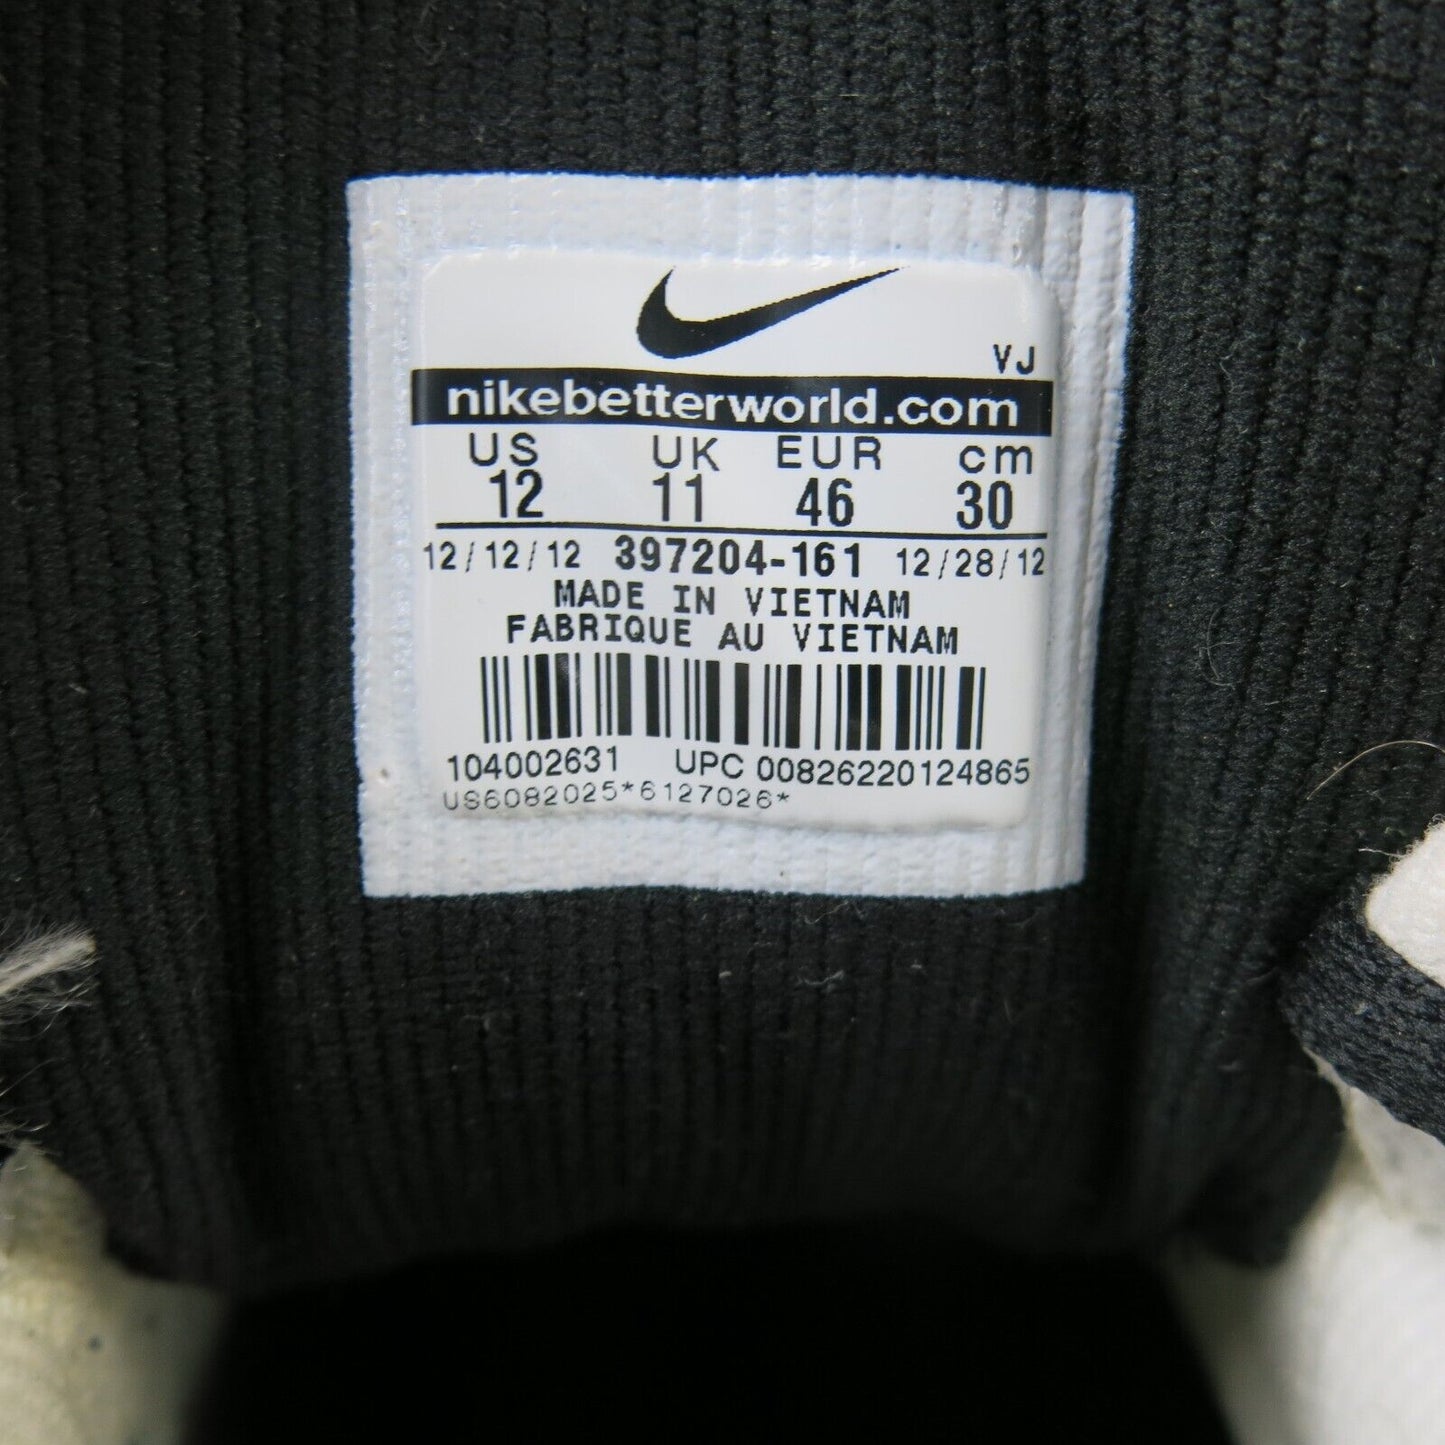 Nike Air Flight Falcon Shoes 397204-161 Black White Athletic Sneaker Size US 12